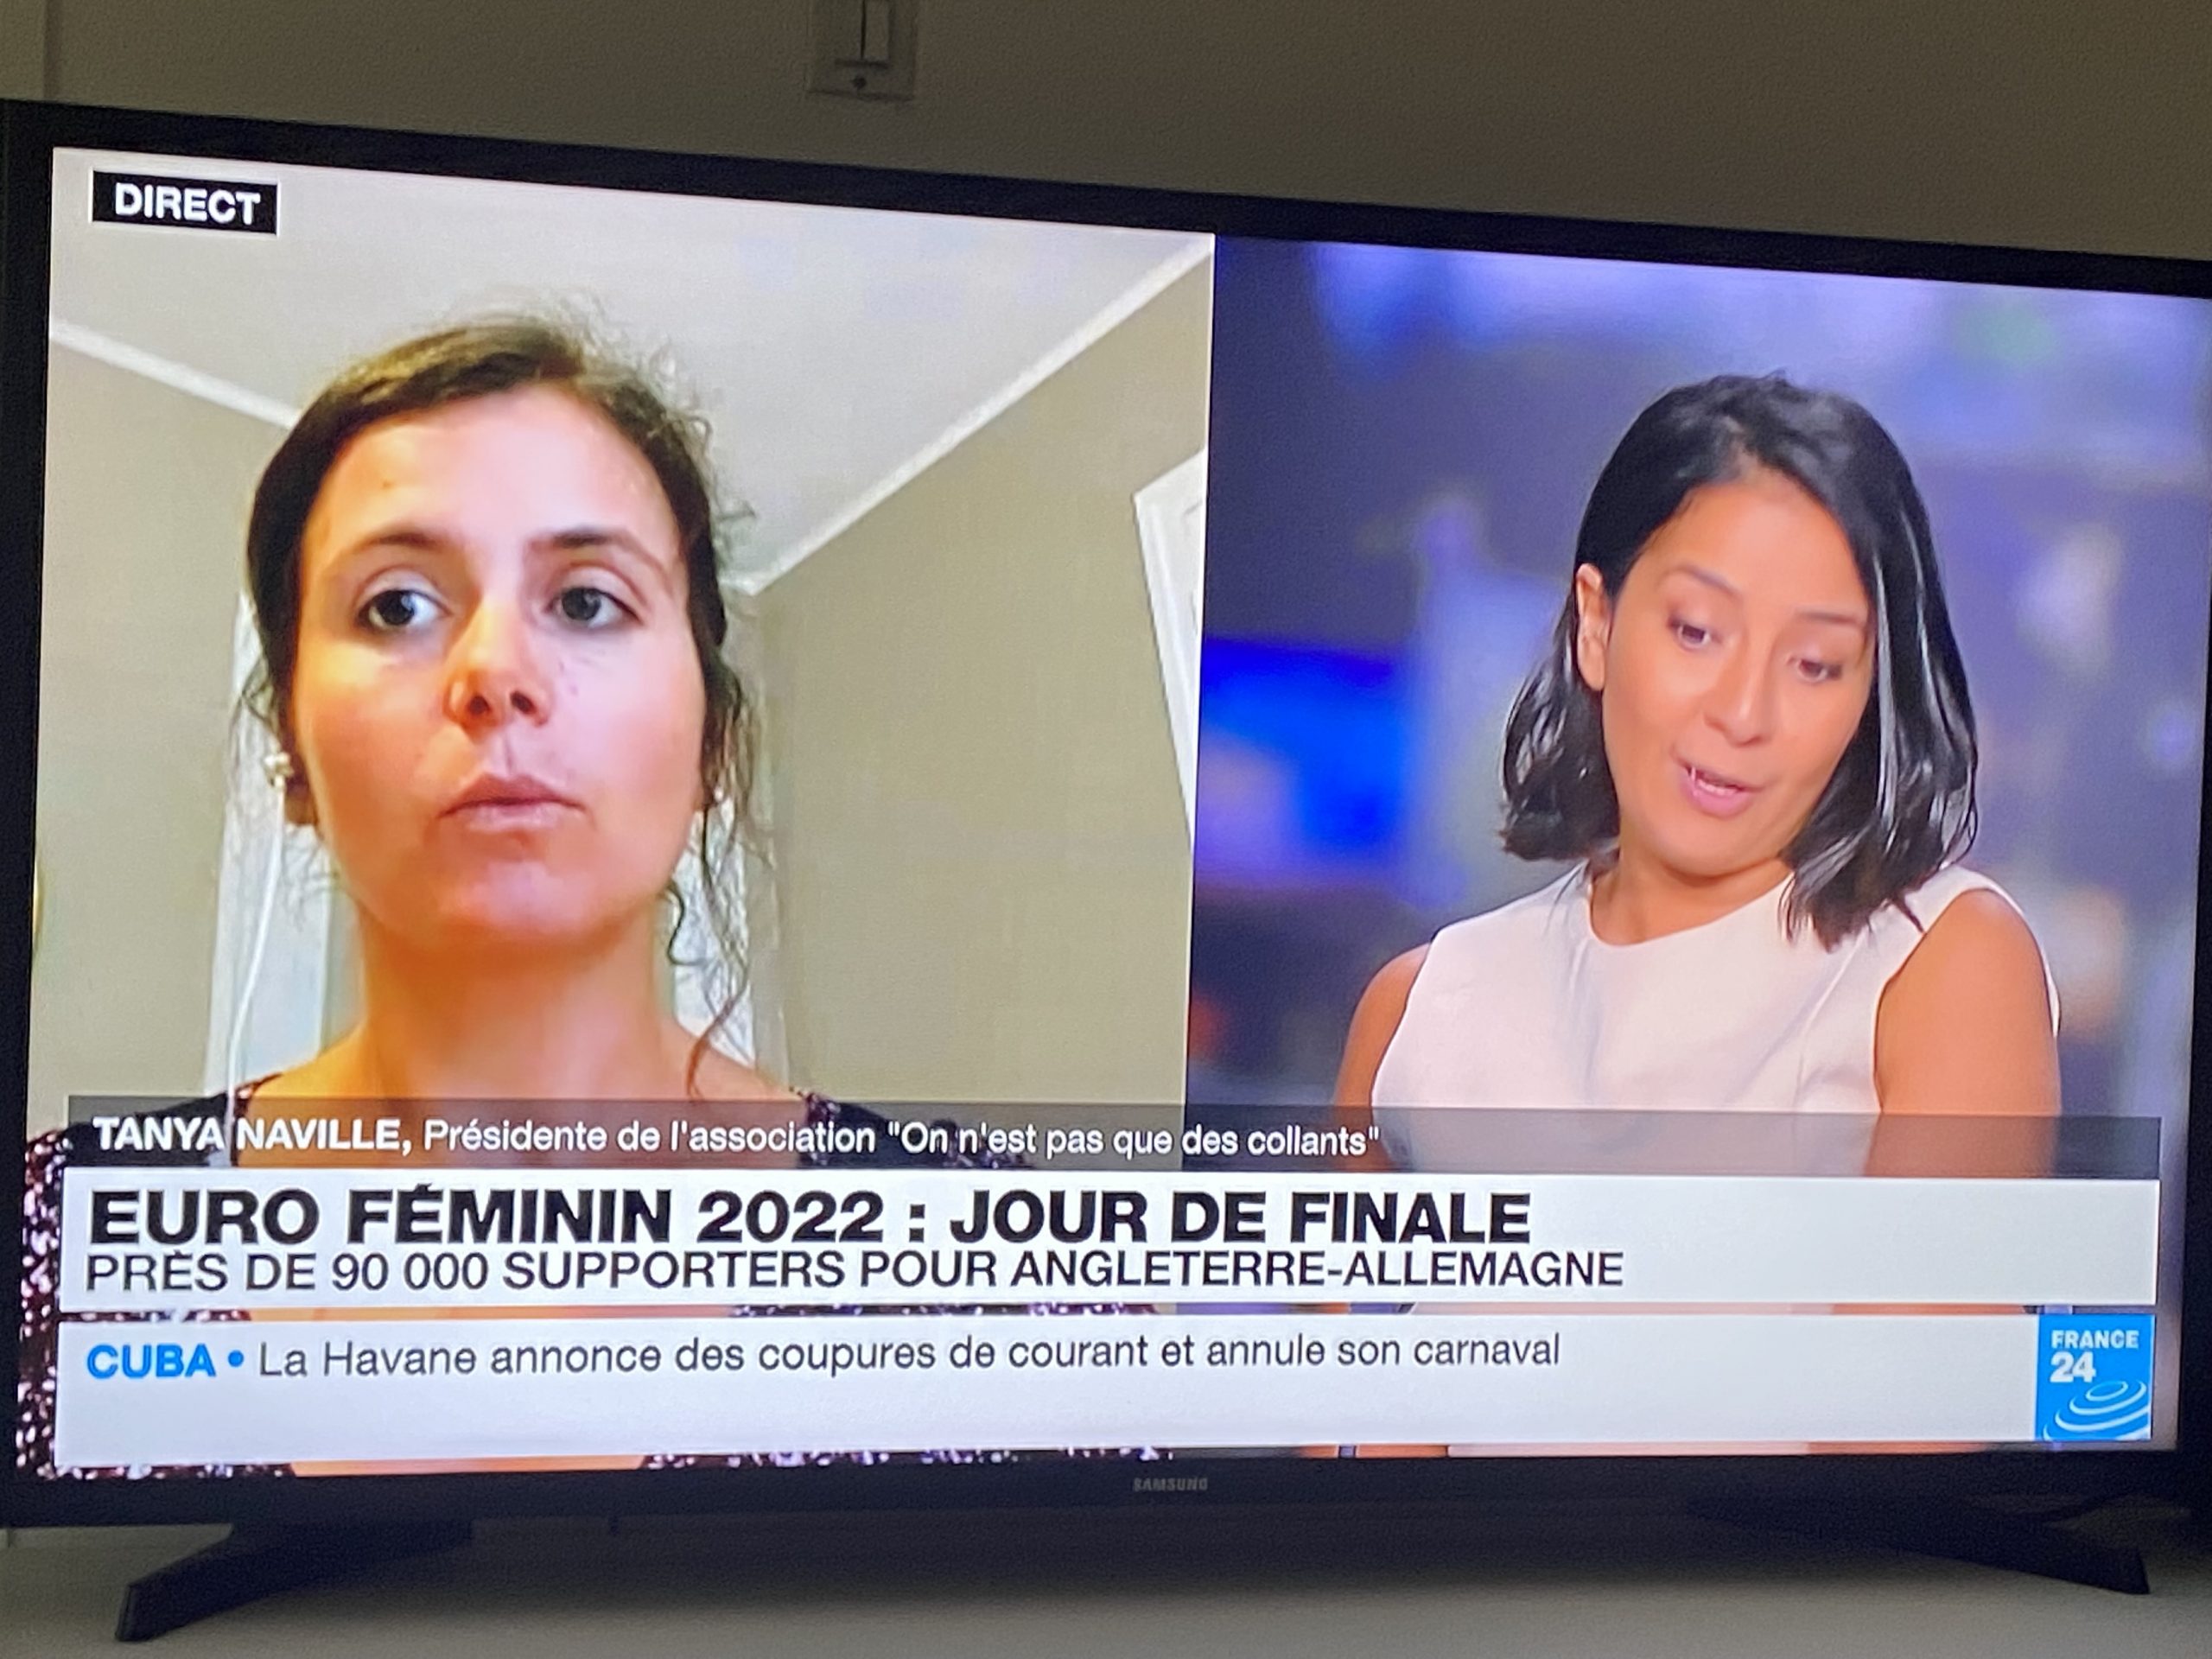 tanya naville interview france24 TV sport féminin 2